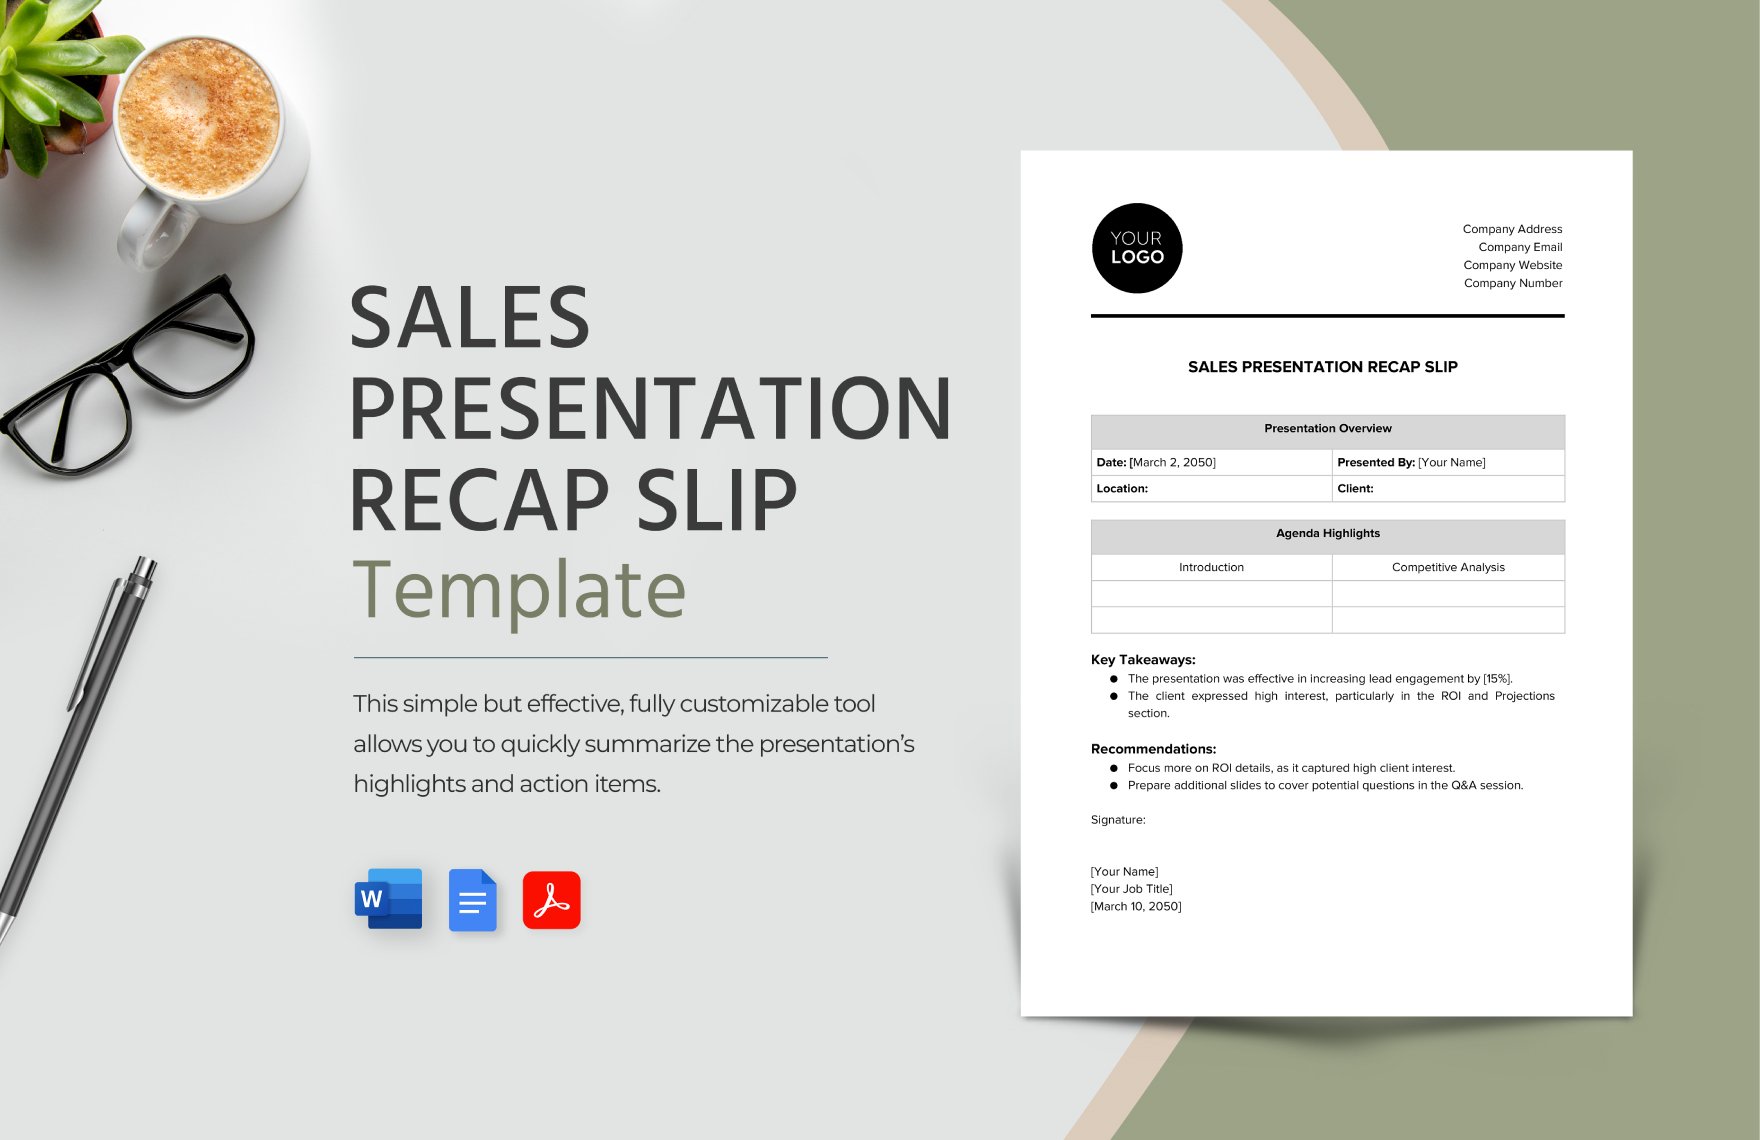 Sales Presentation Recap Slip Template